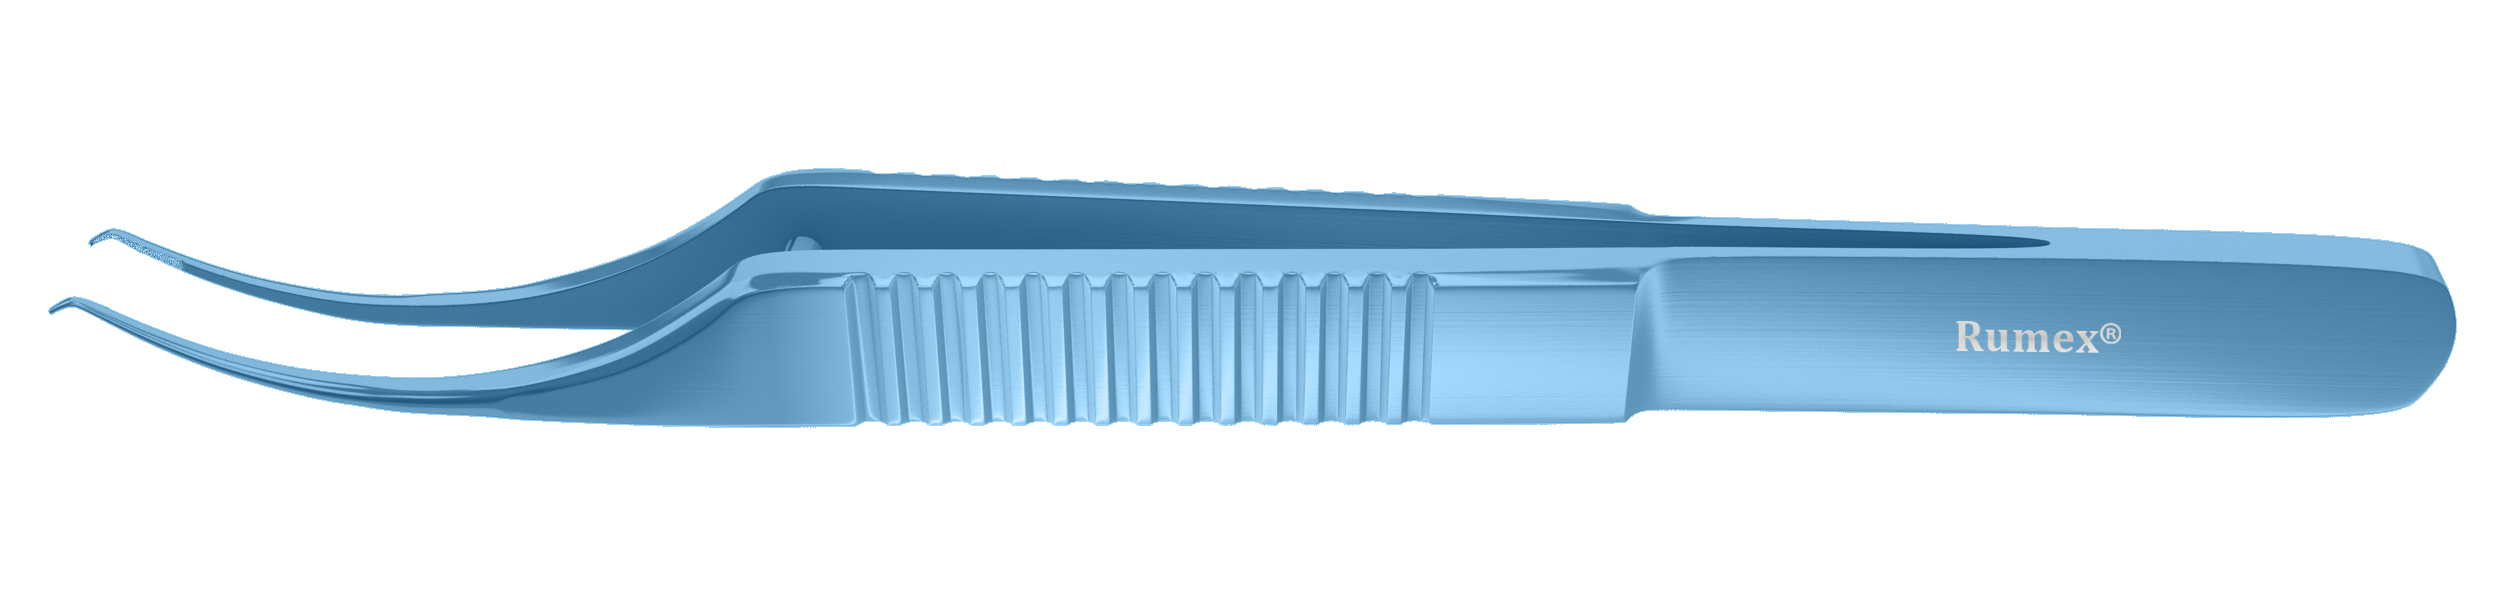 384R 4-053T Colibri-Bonn Corneal Forceps, 0.12 mm, 1x2 Teeth, 5.00 mm Platform, Flat Handle, Length 115 mm, Titanium